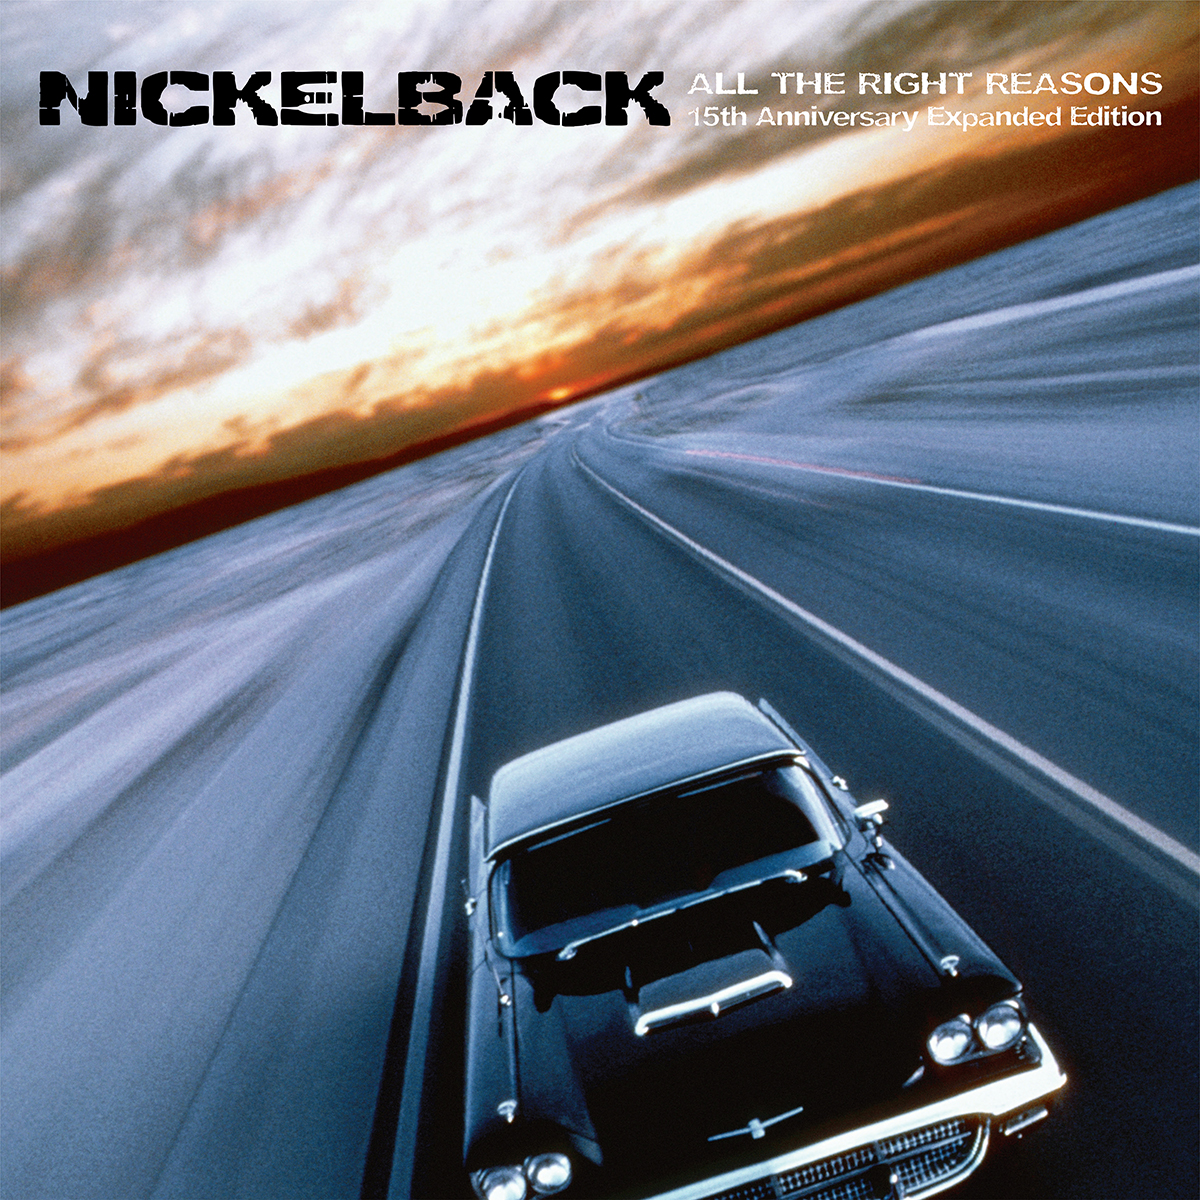 Nickelback’s Diamond-Certified #1 Album All The Right Reasons Turns 15